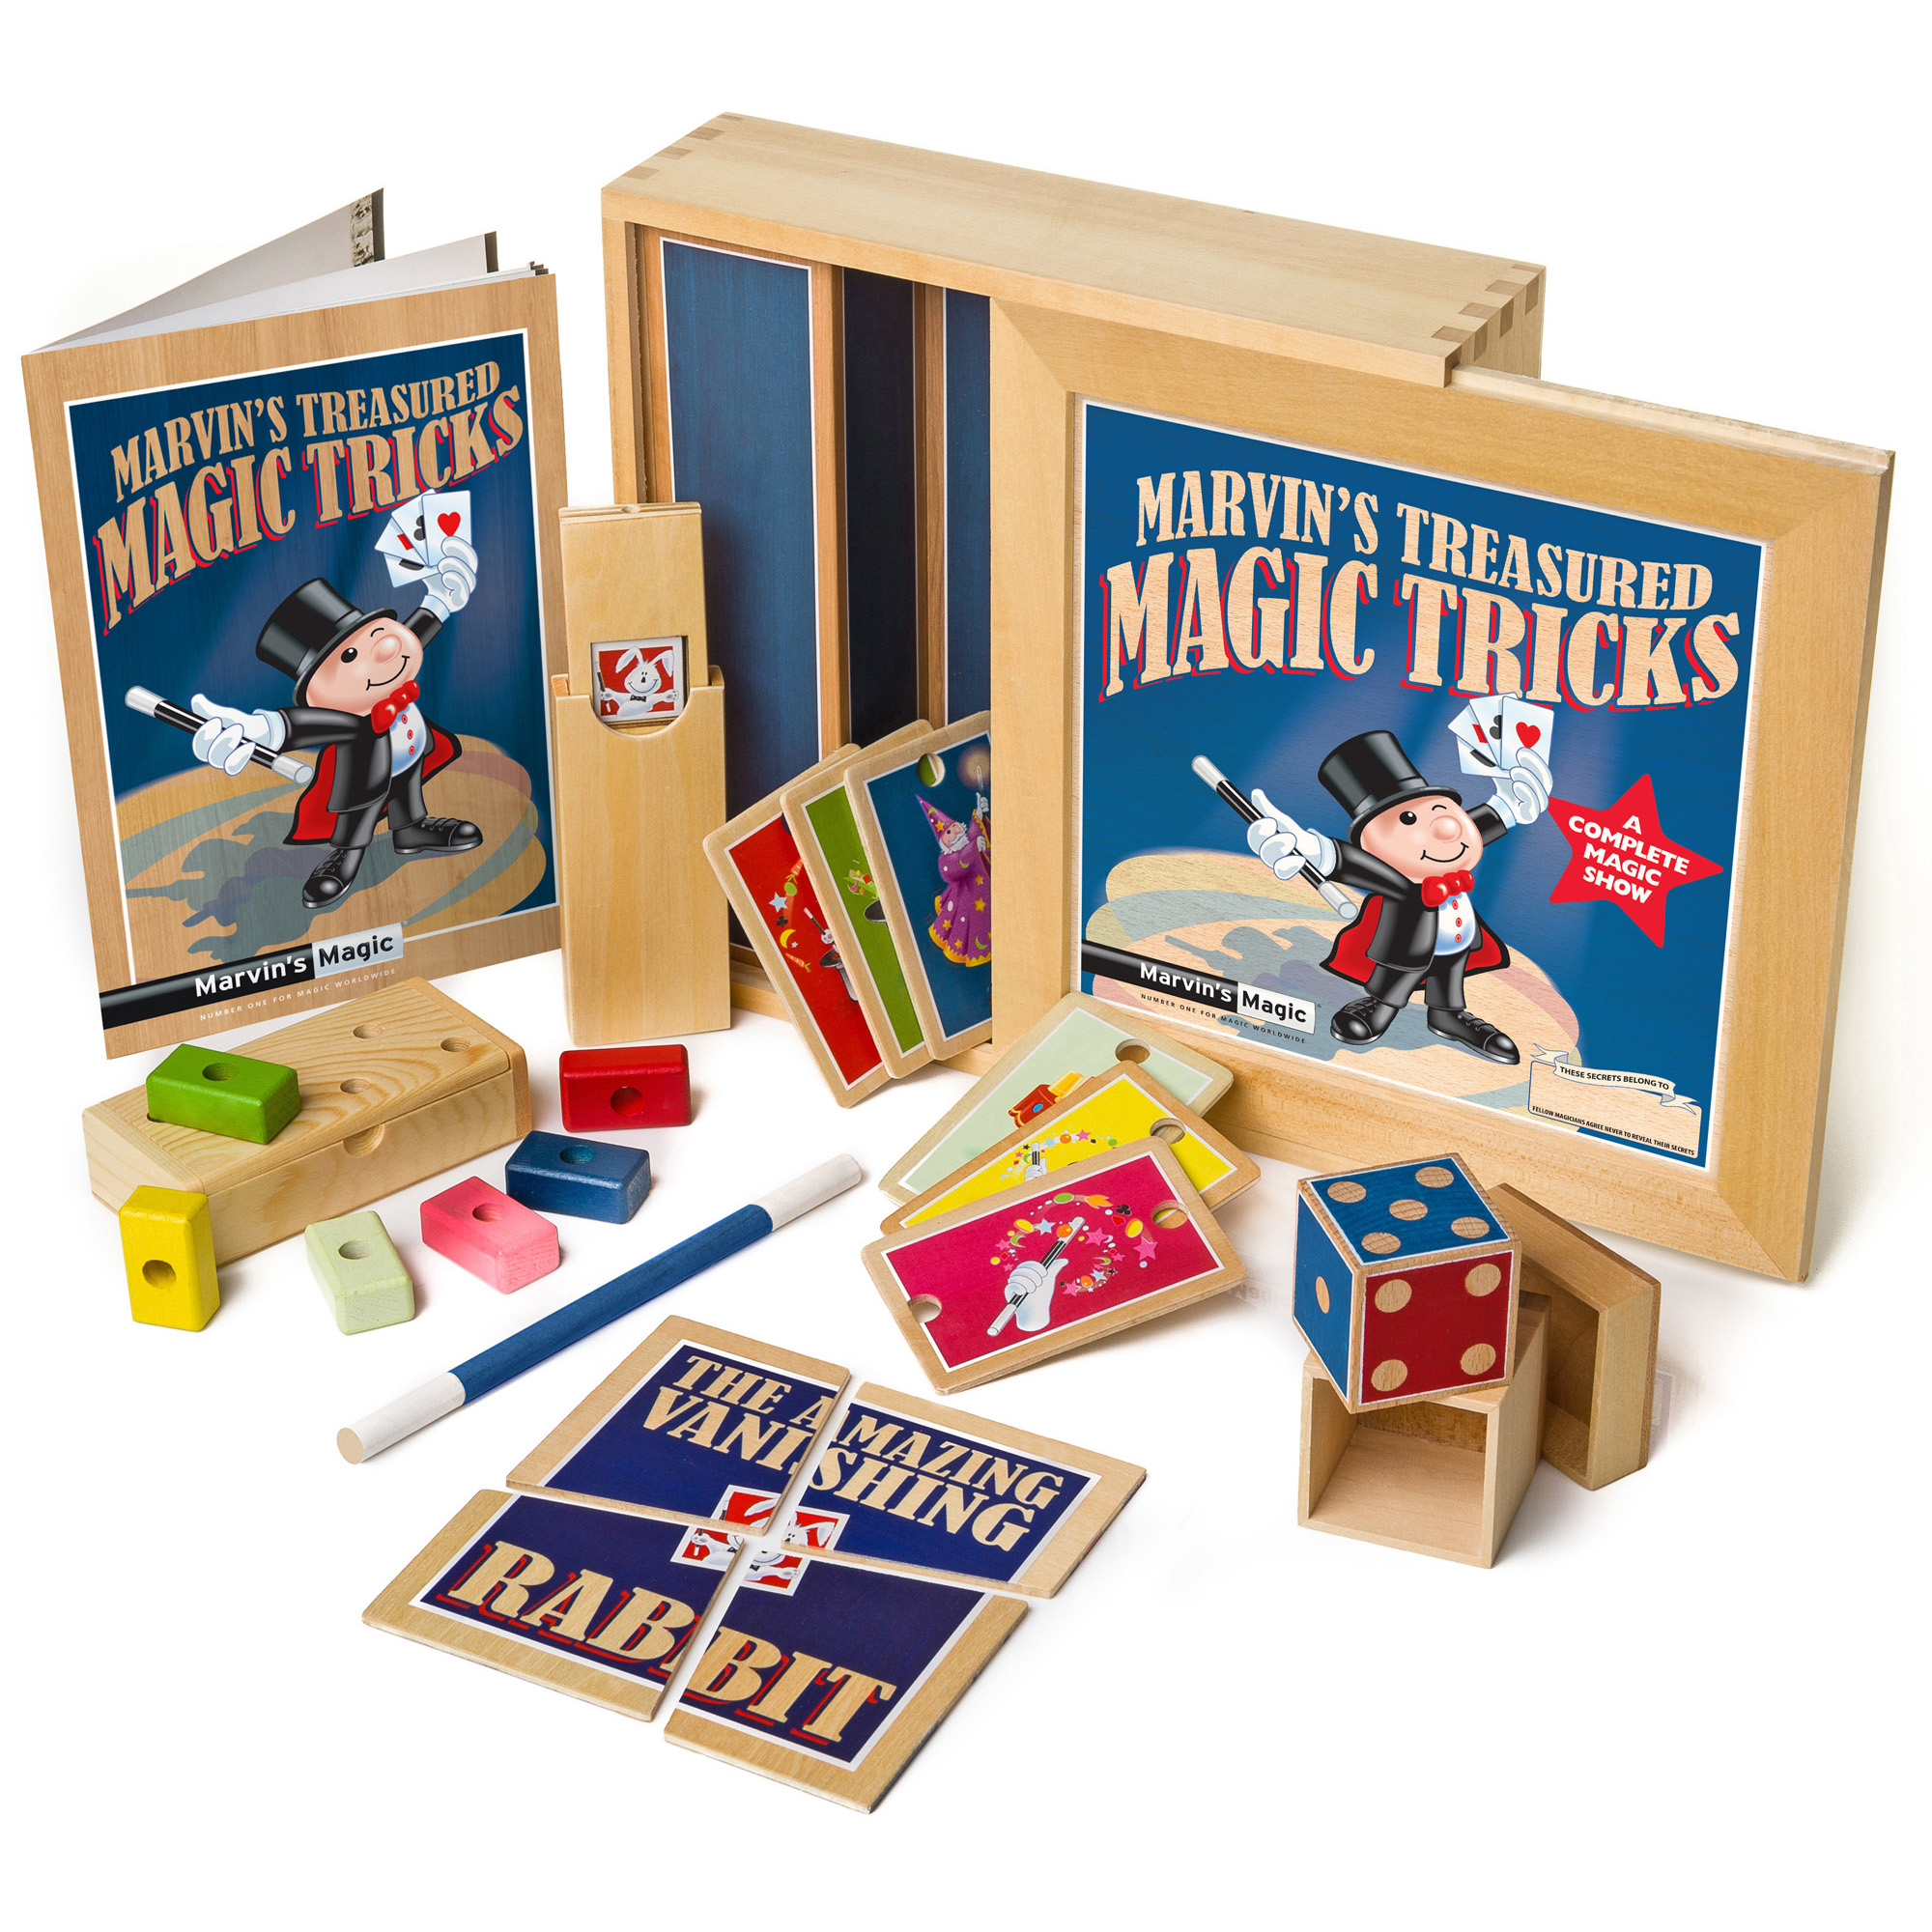 Box trucchi di magia Marvin's Treasured Magic Tricks in Vendita Online